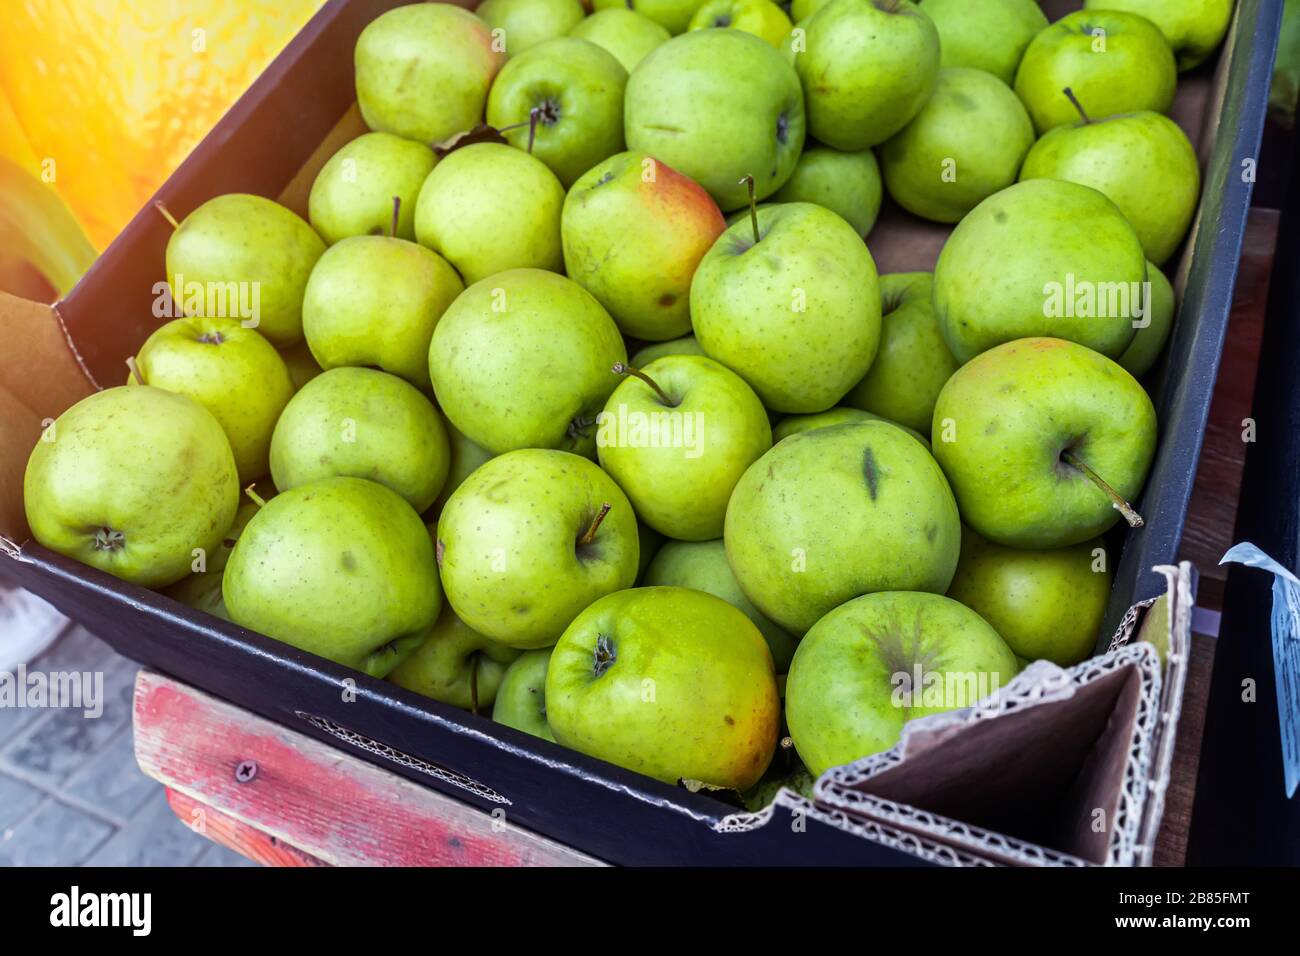 https://c8.alamy.com/comp/2B85FMT/green-apples-in-a-box-on-a-street-store-2B85FMT.jpg